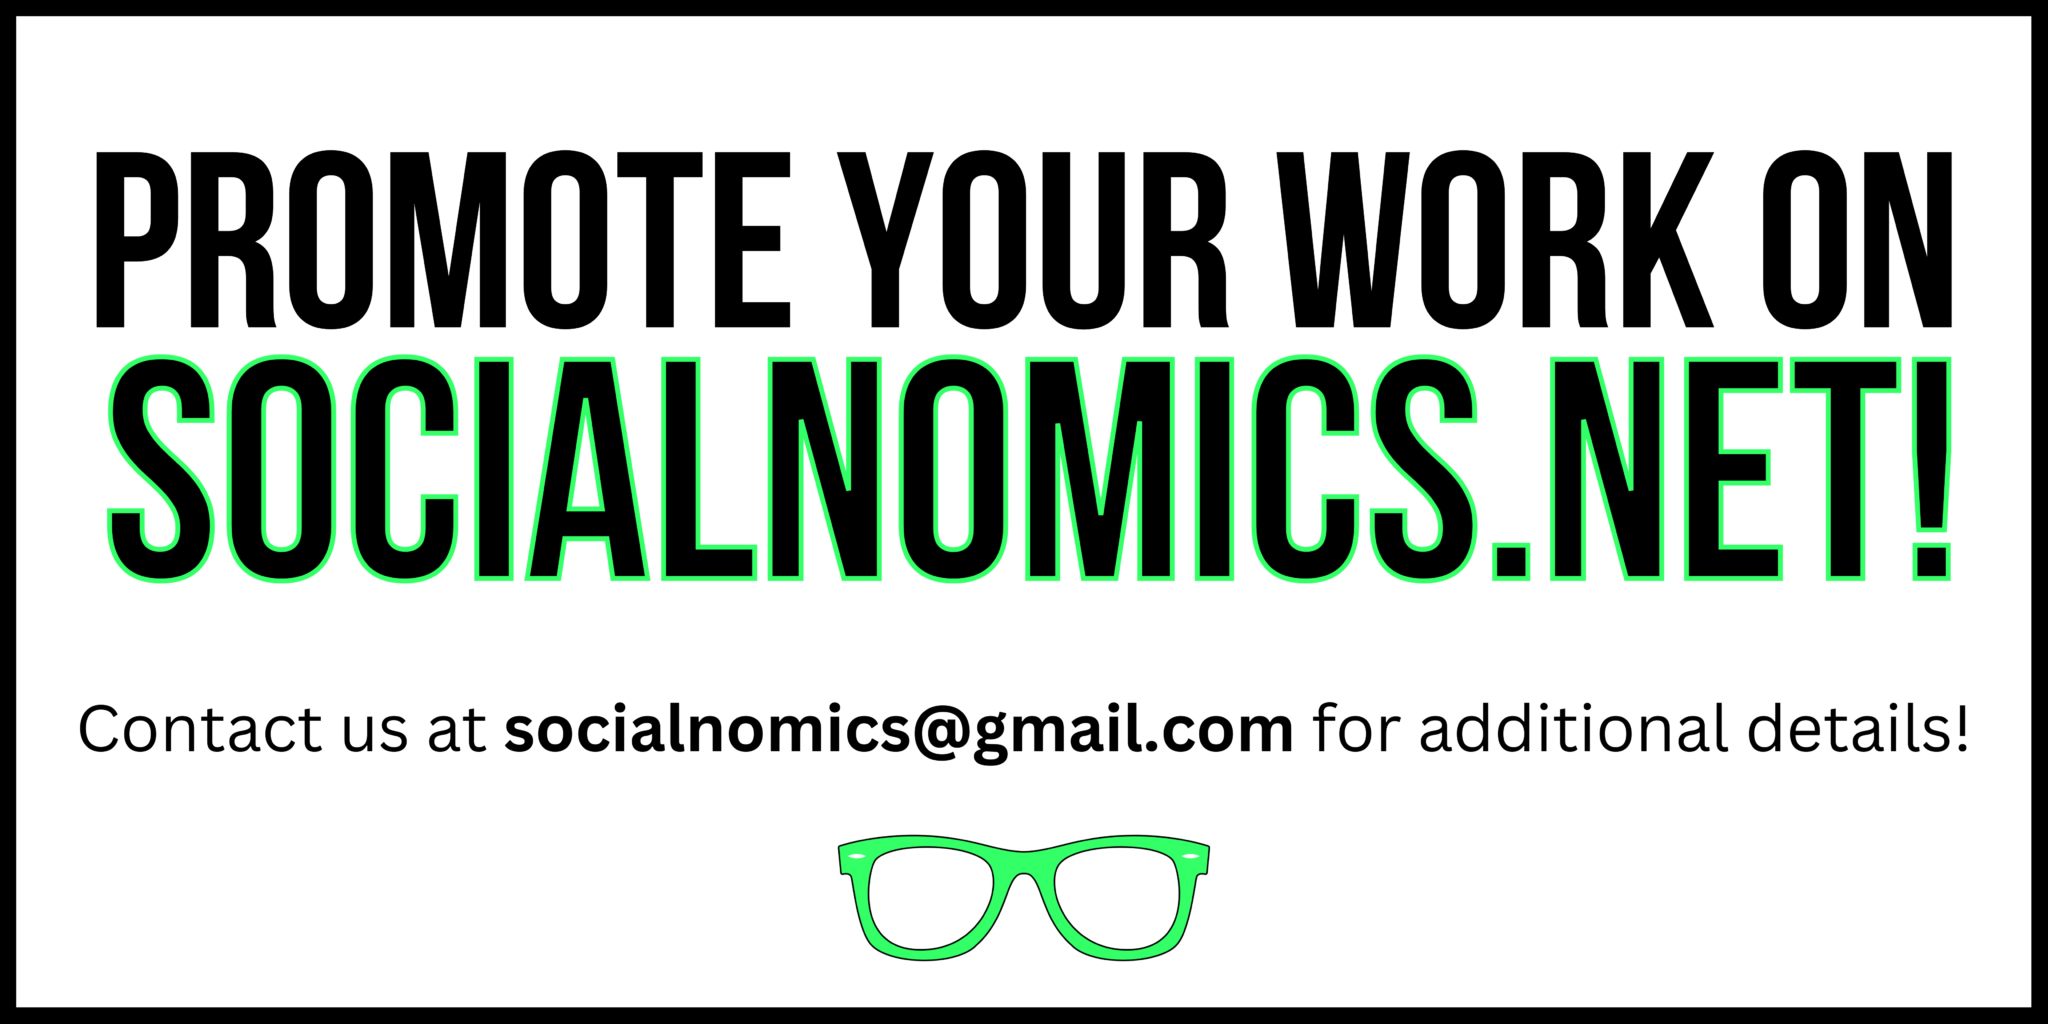 Advertise on socialnomics.net!